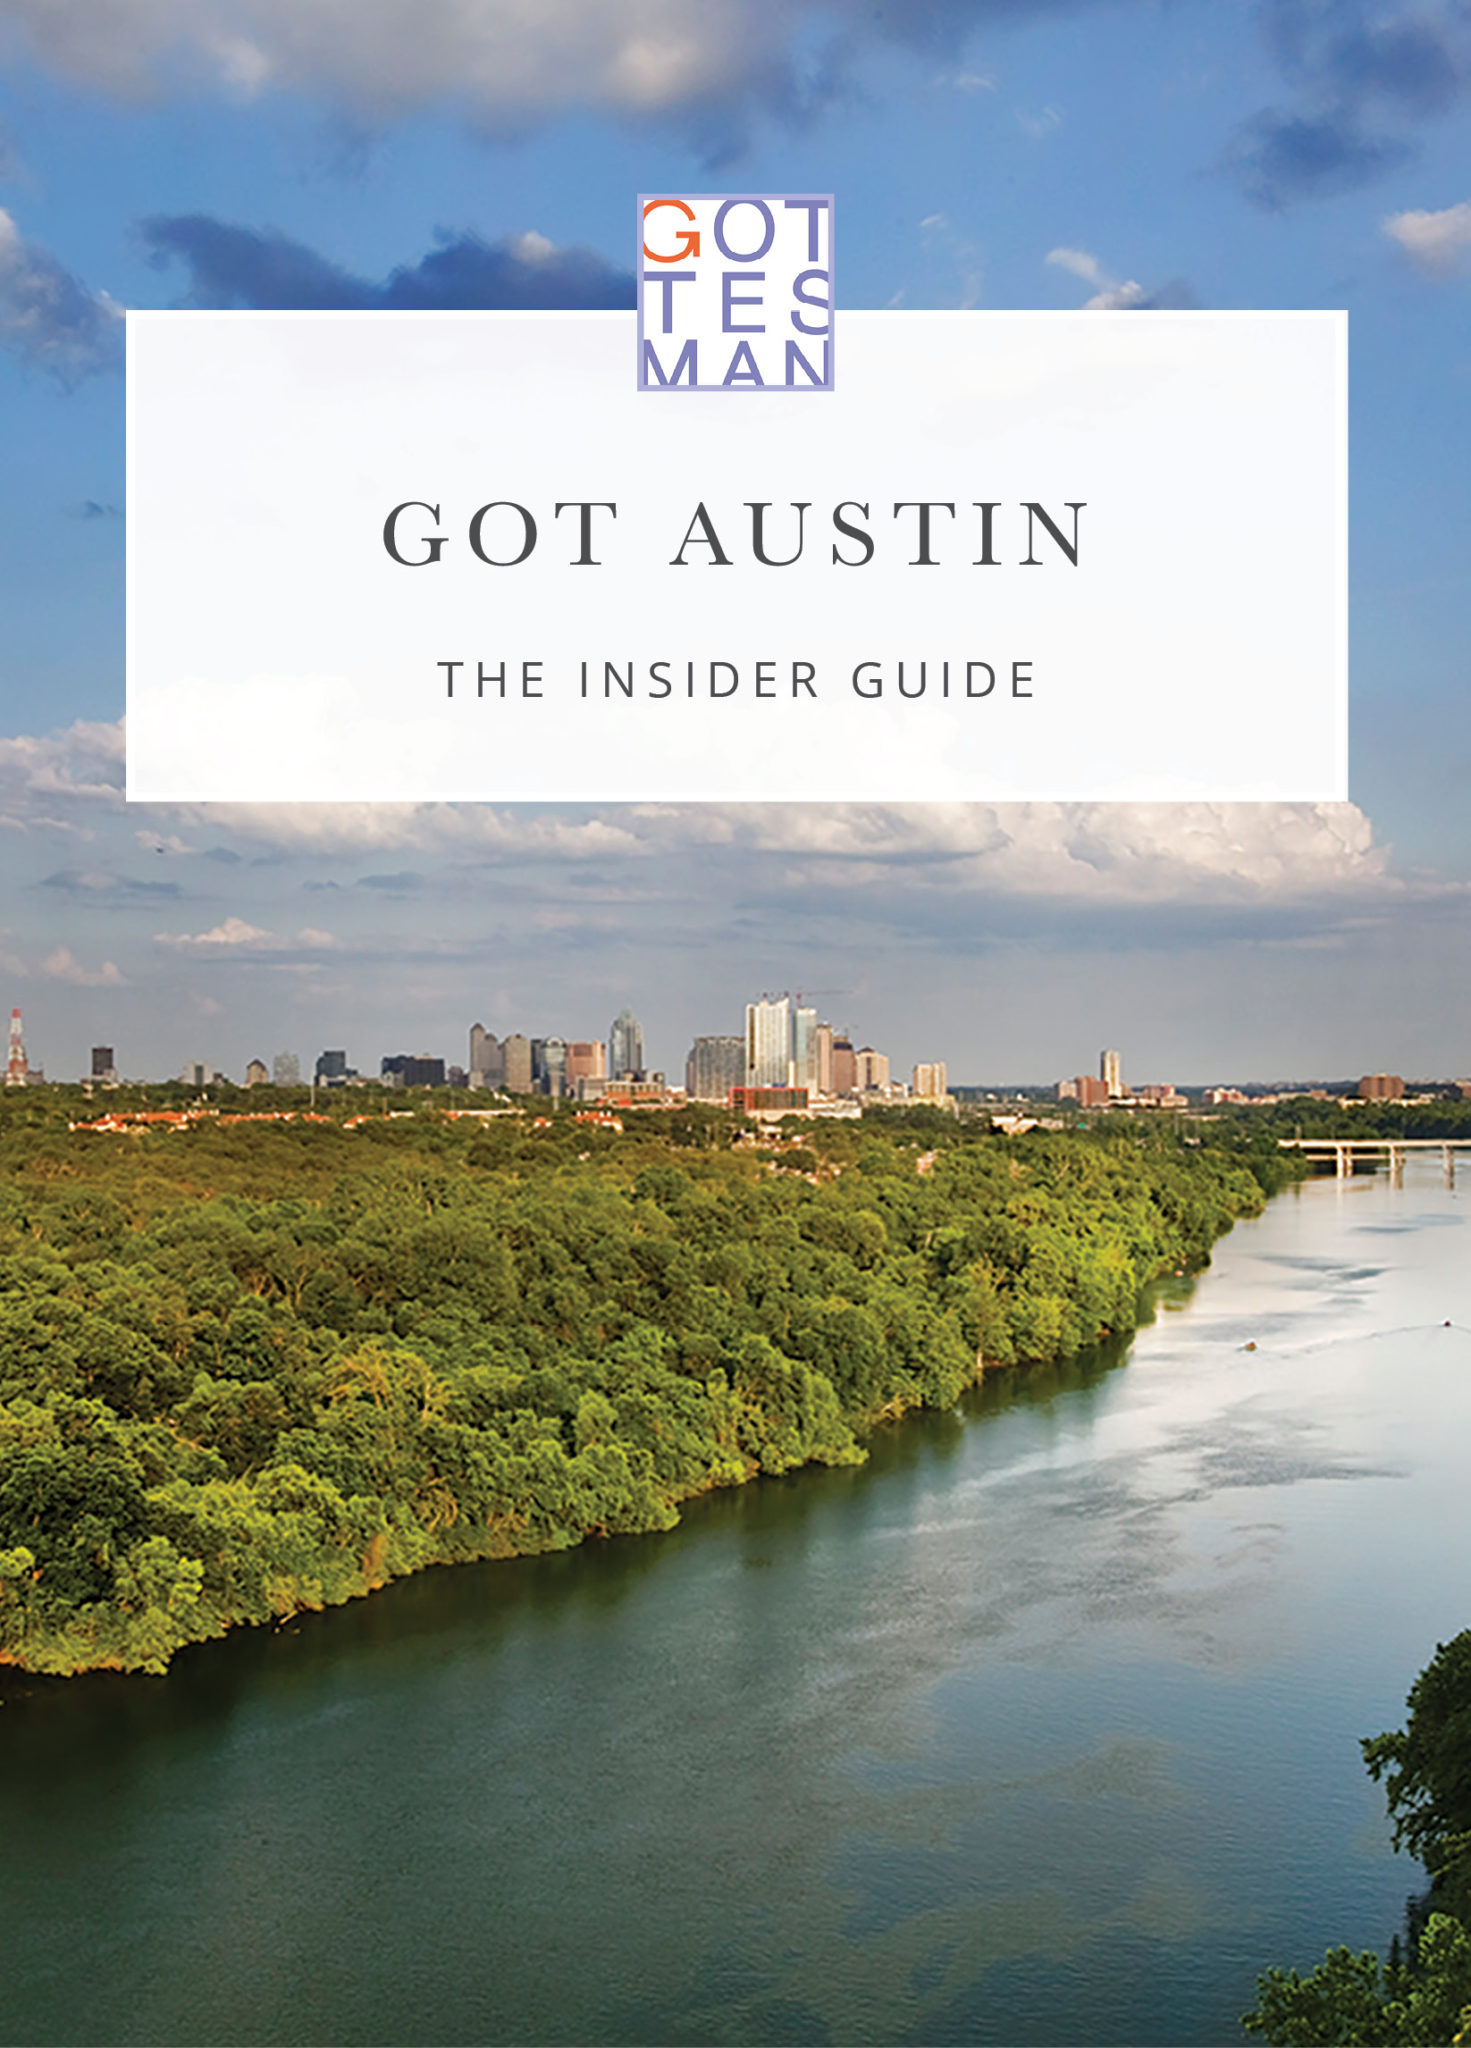 Austin skyline with text overlay, "Got Austin: The Insider Guide"